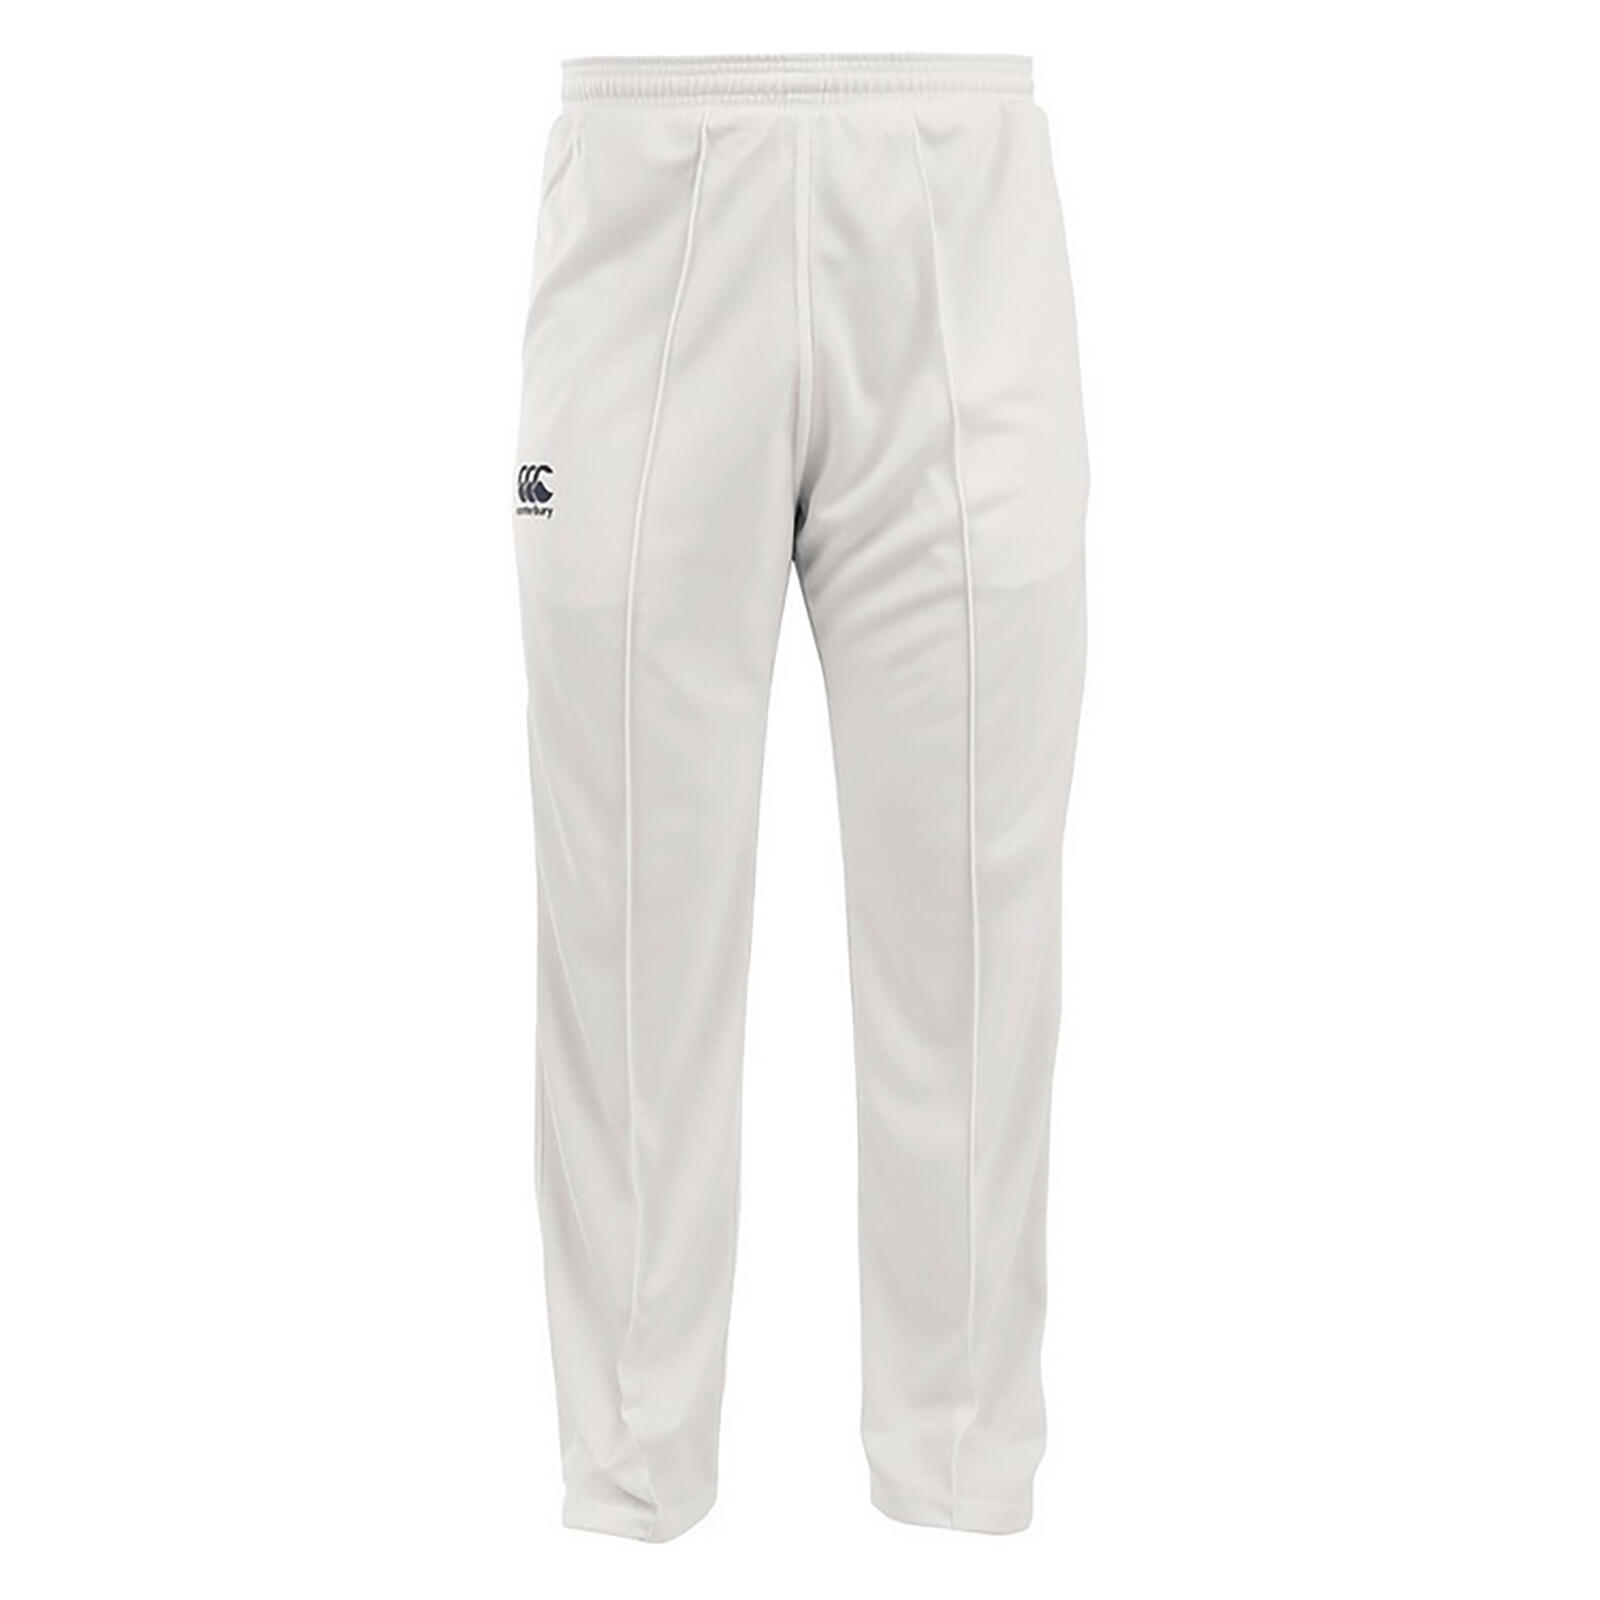 Mens Cricket Pants (Cream) 1/3